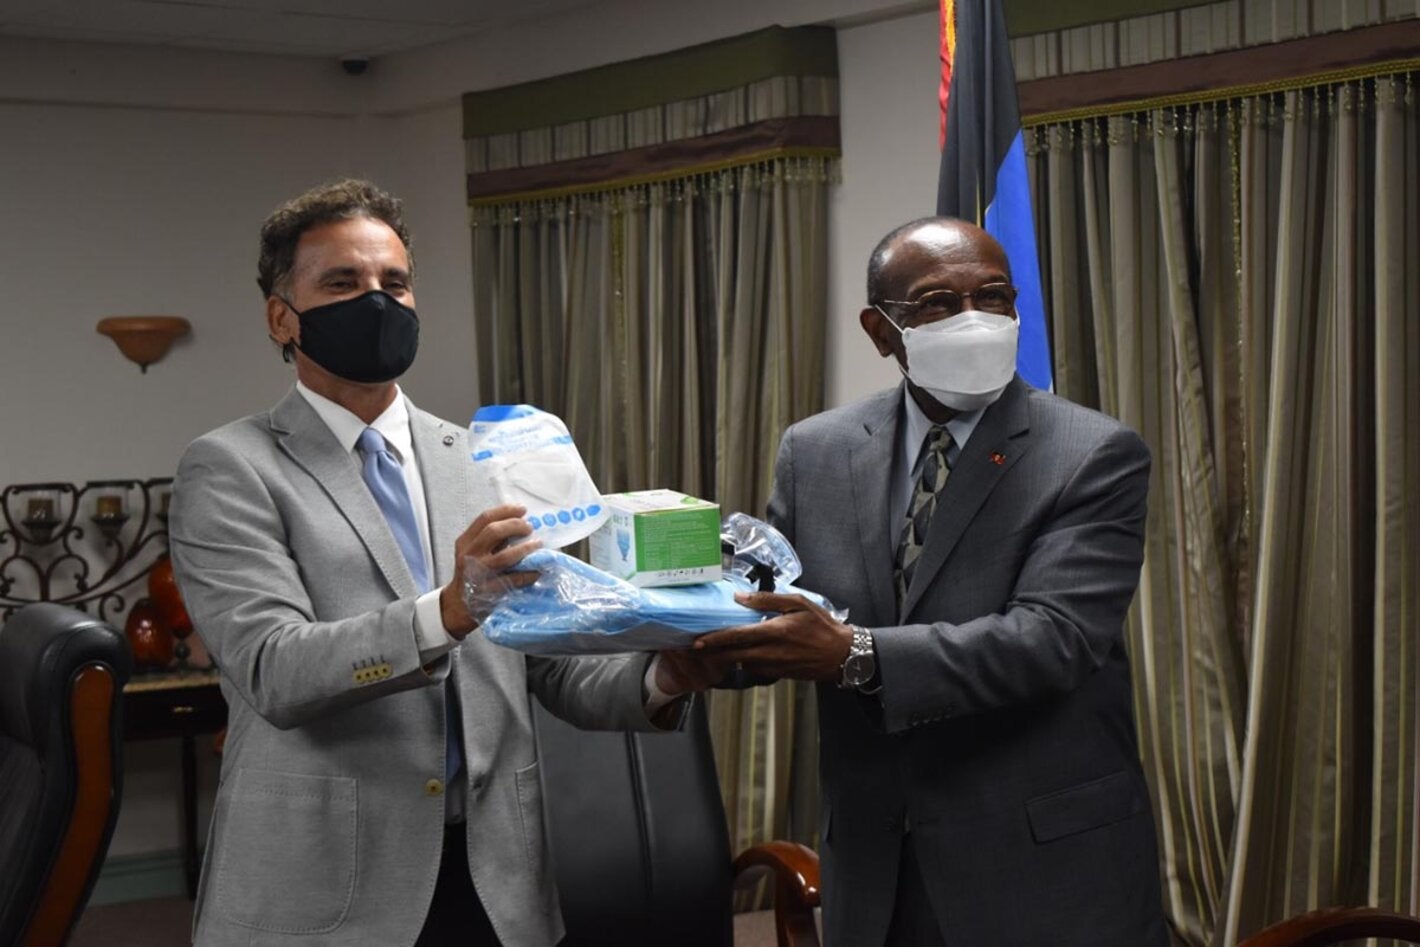 PPE handover in Antigua and Barbuda